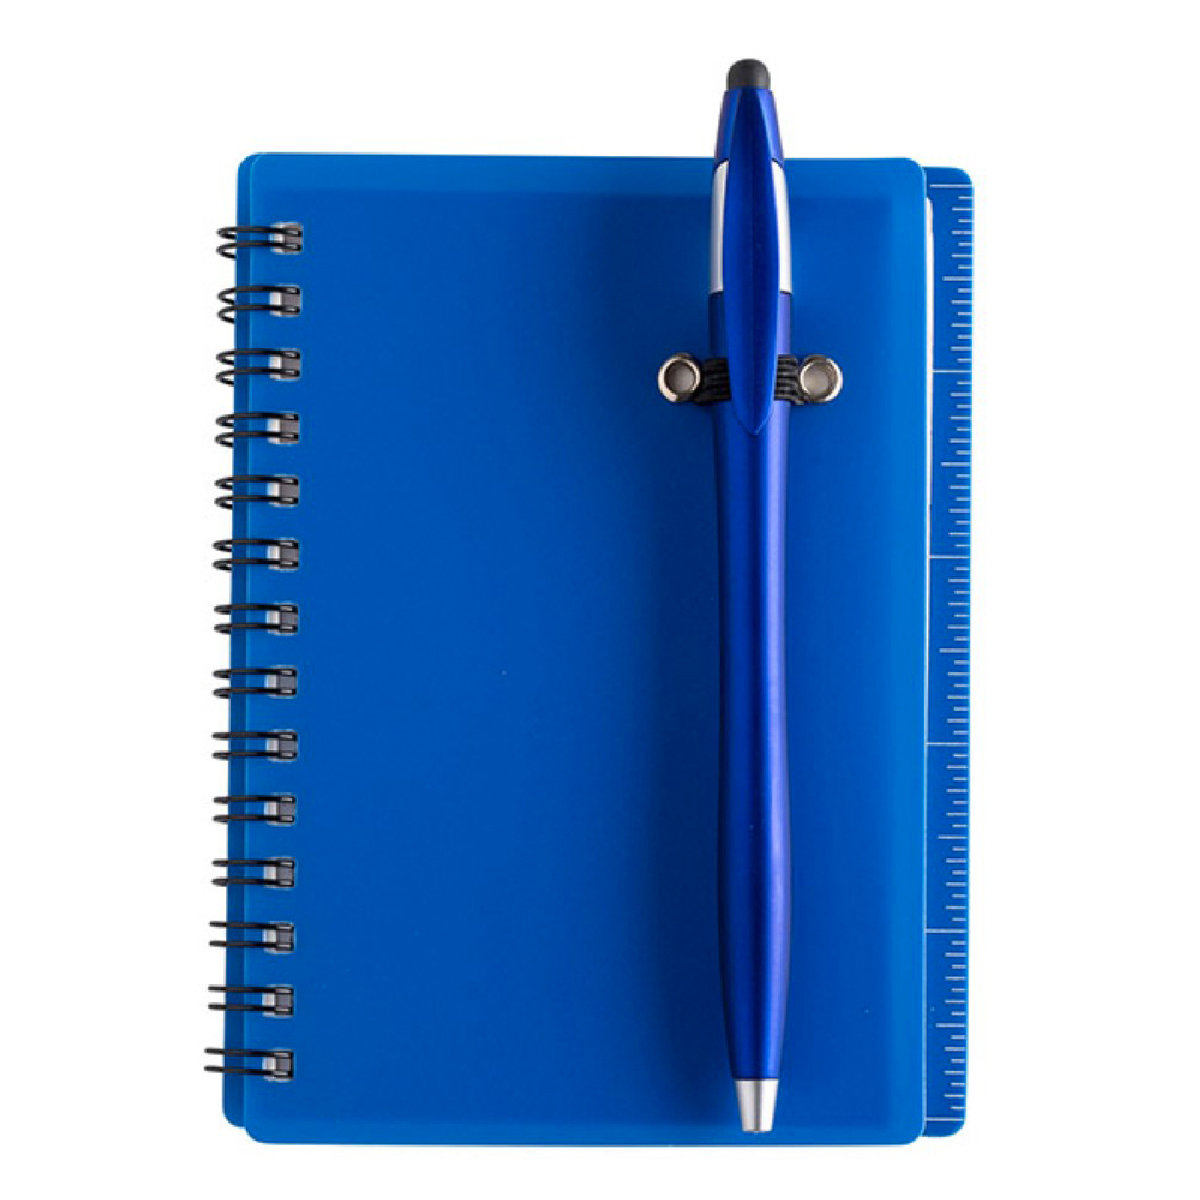 Translucent Blue Seattle Spiral Notebook & Pen